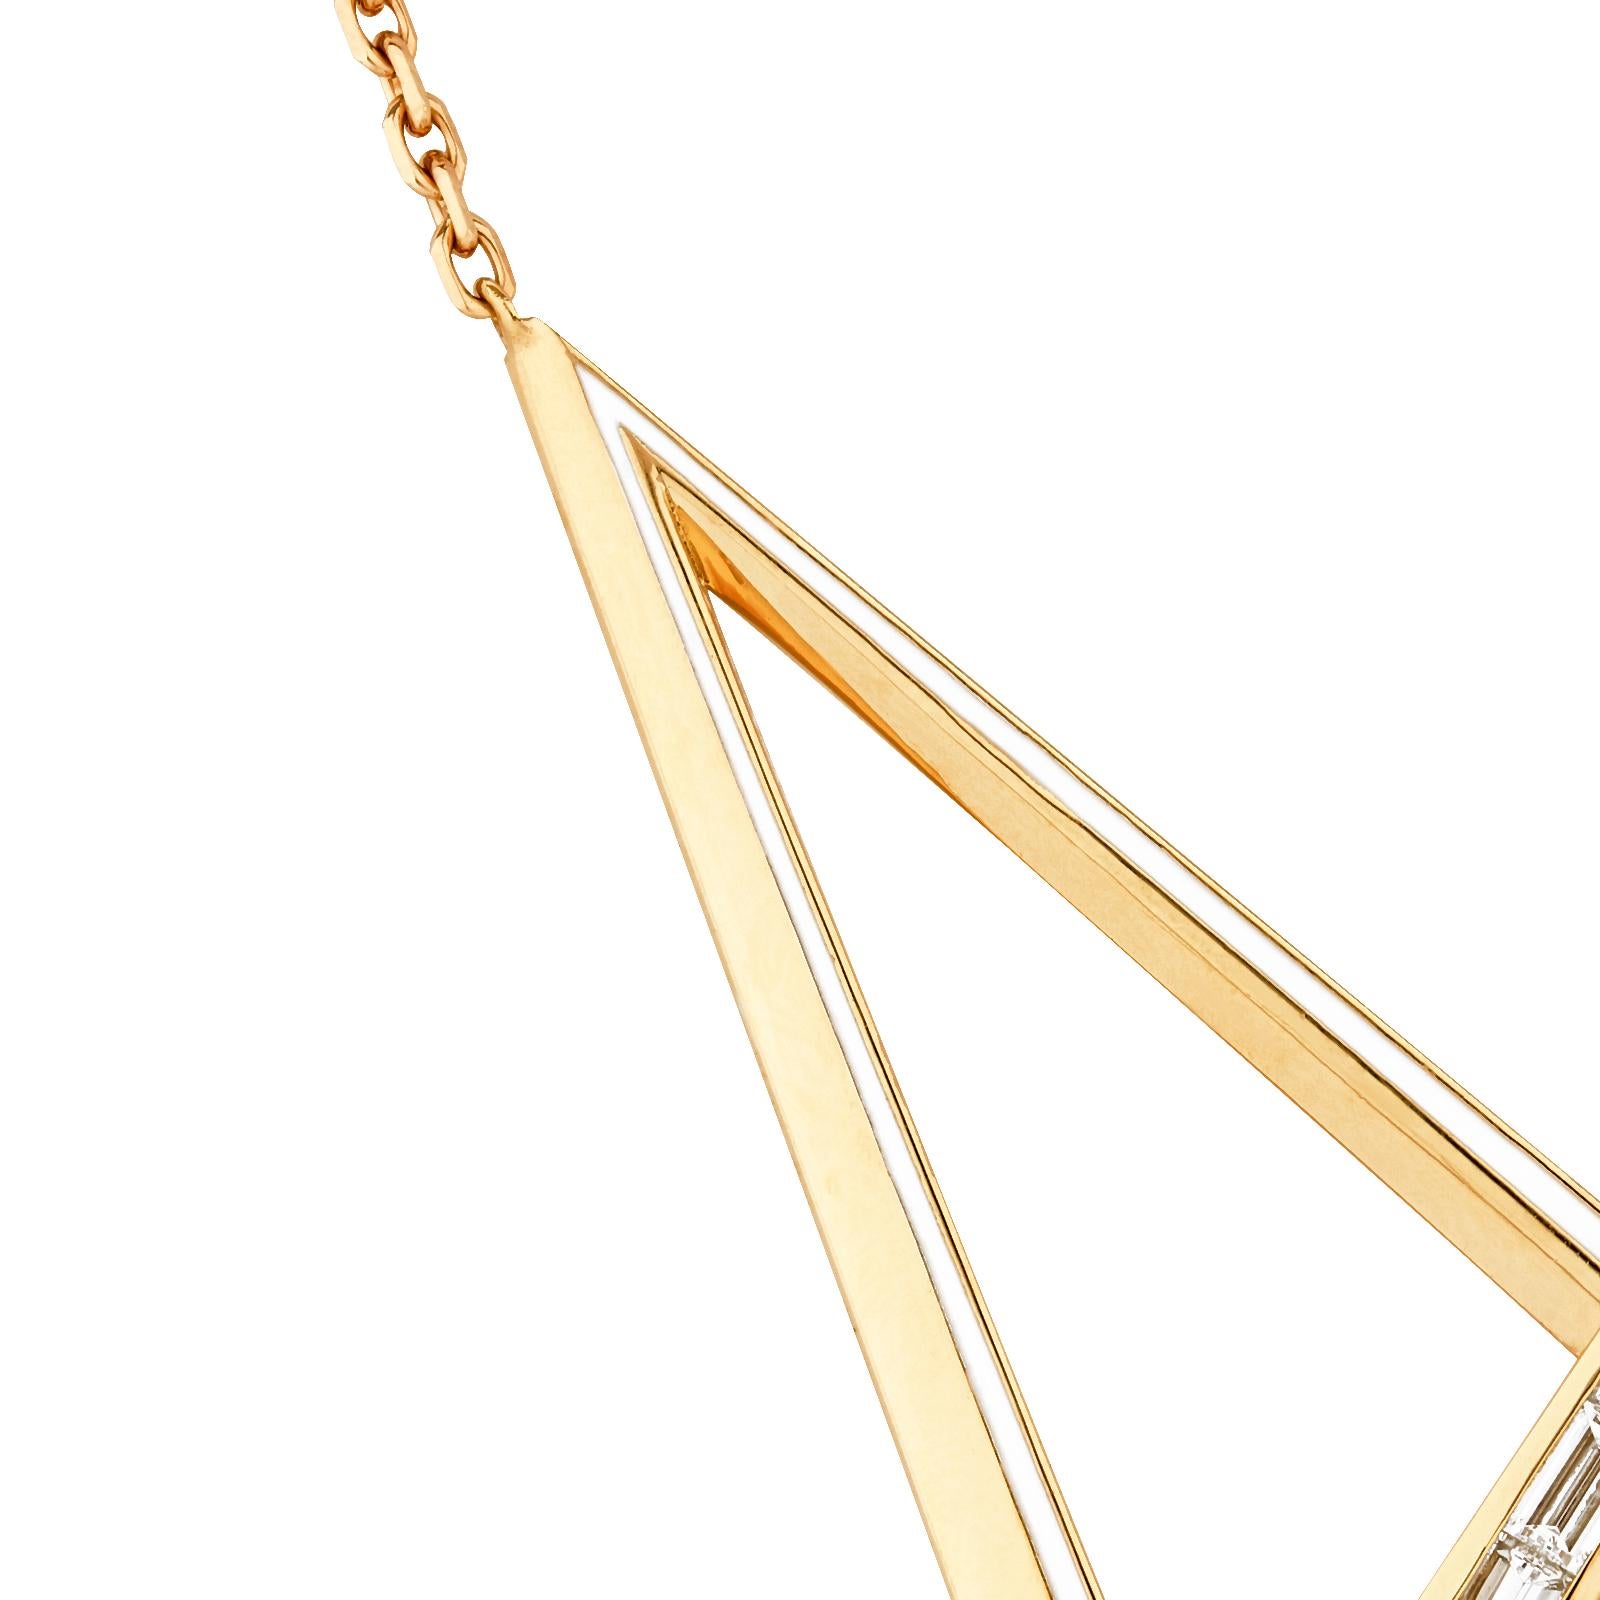 Contemporary Stephen Webster Vertigo Very Obtuse 18 Karat Gold and White Diamond Necklace